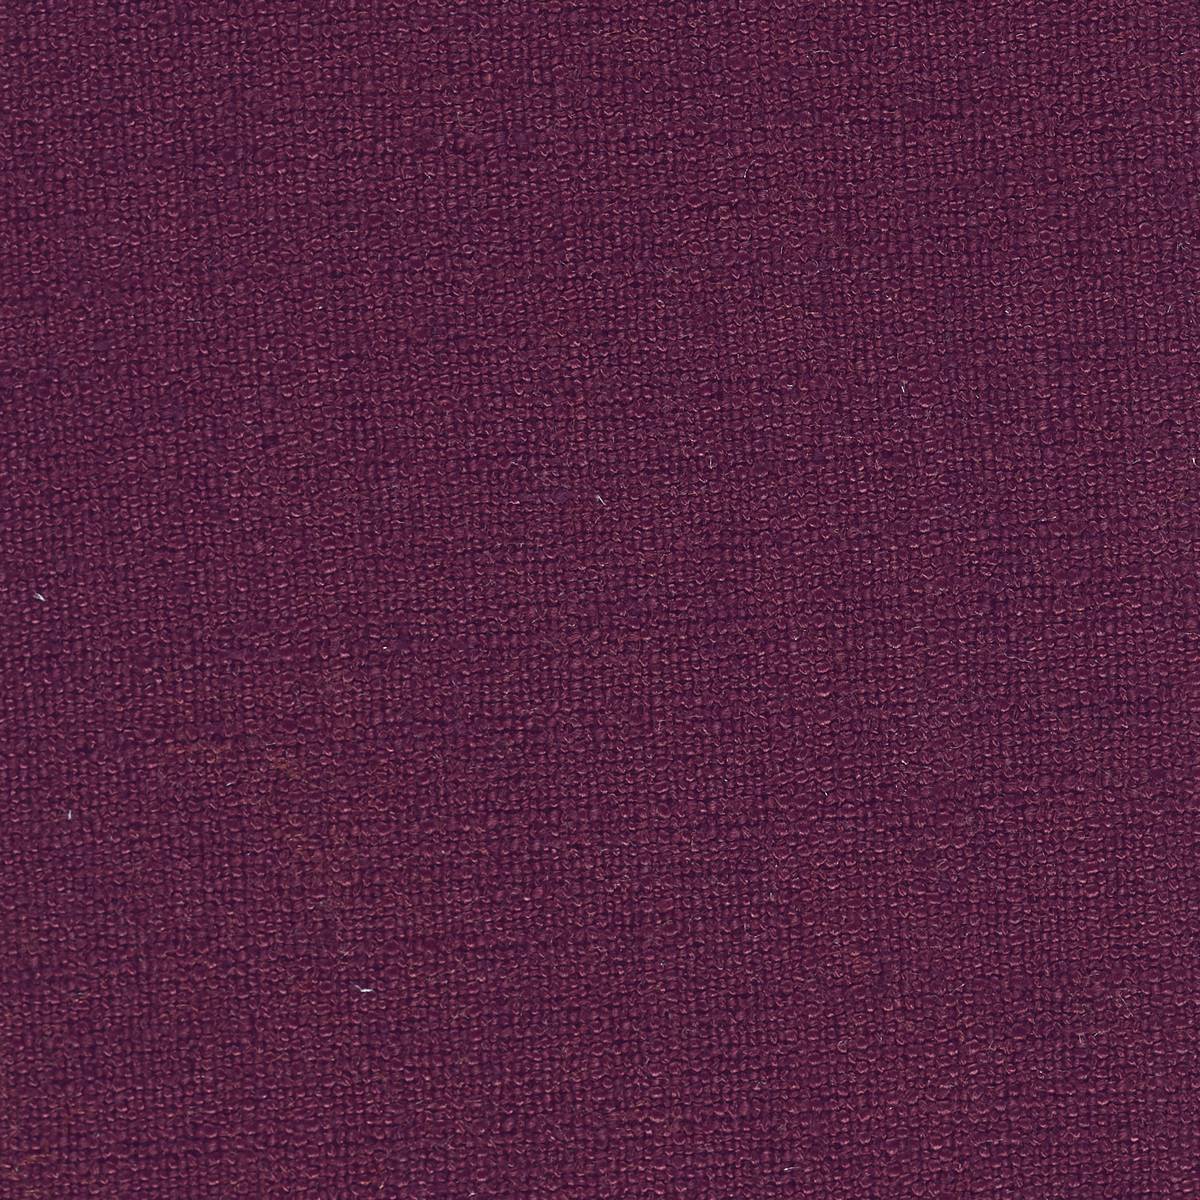 Harmonic Mulberry Fabric by Harlequin